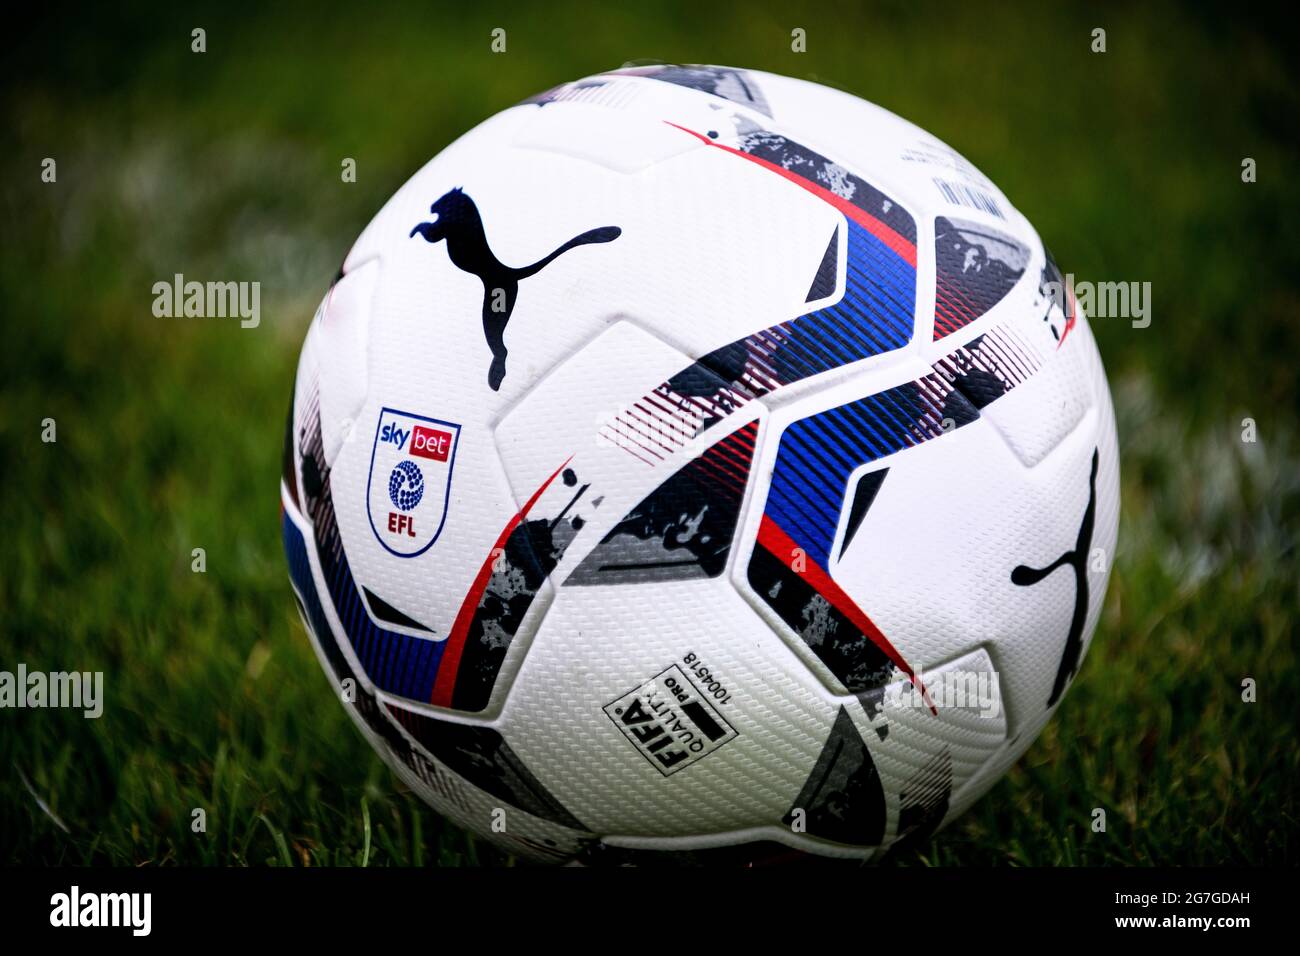 PUMA Official Match Ball EFL 21/22 Stock Photo - Alamy